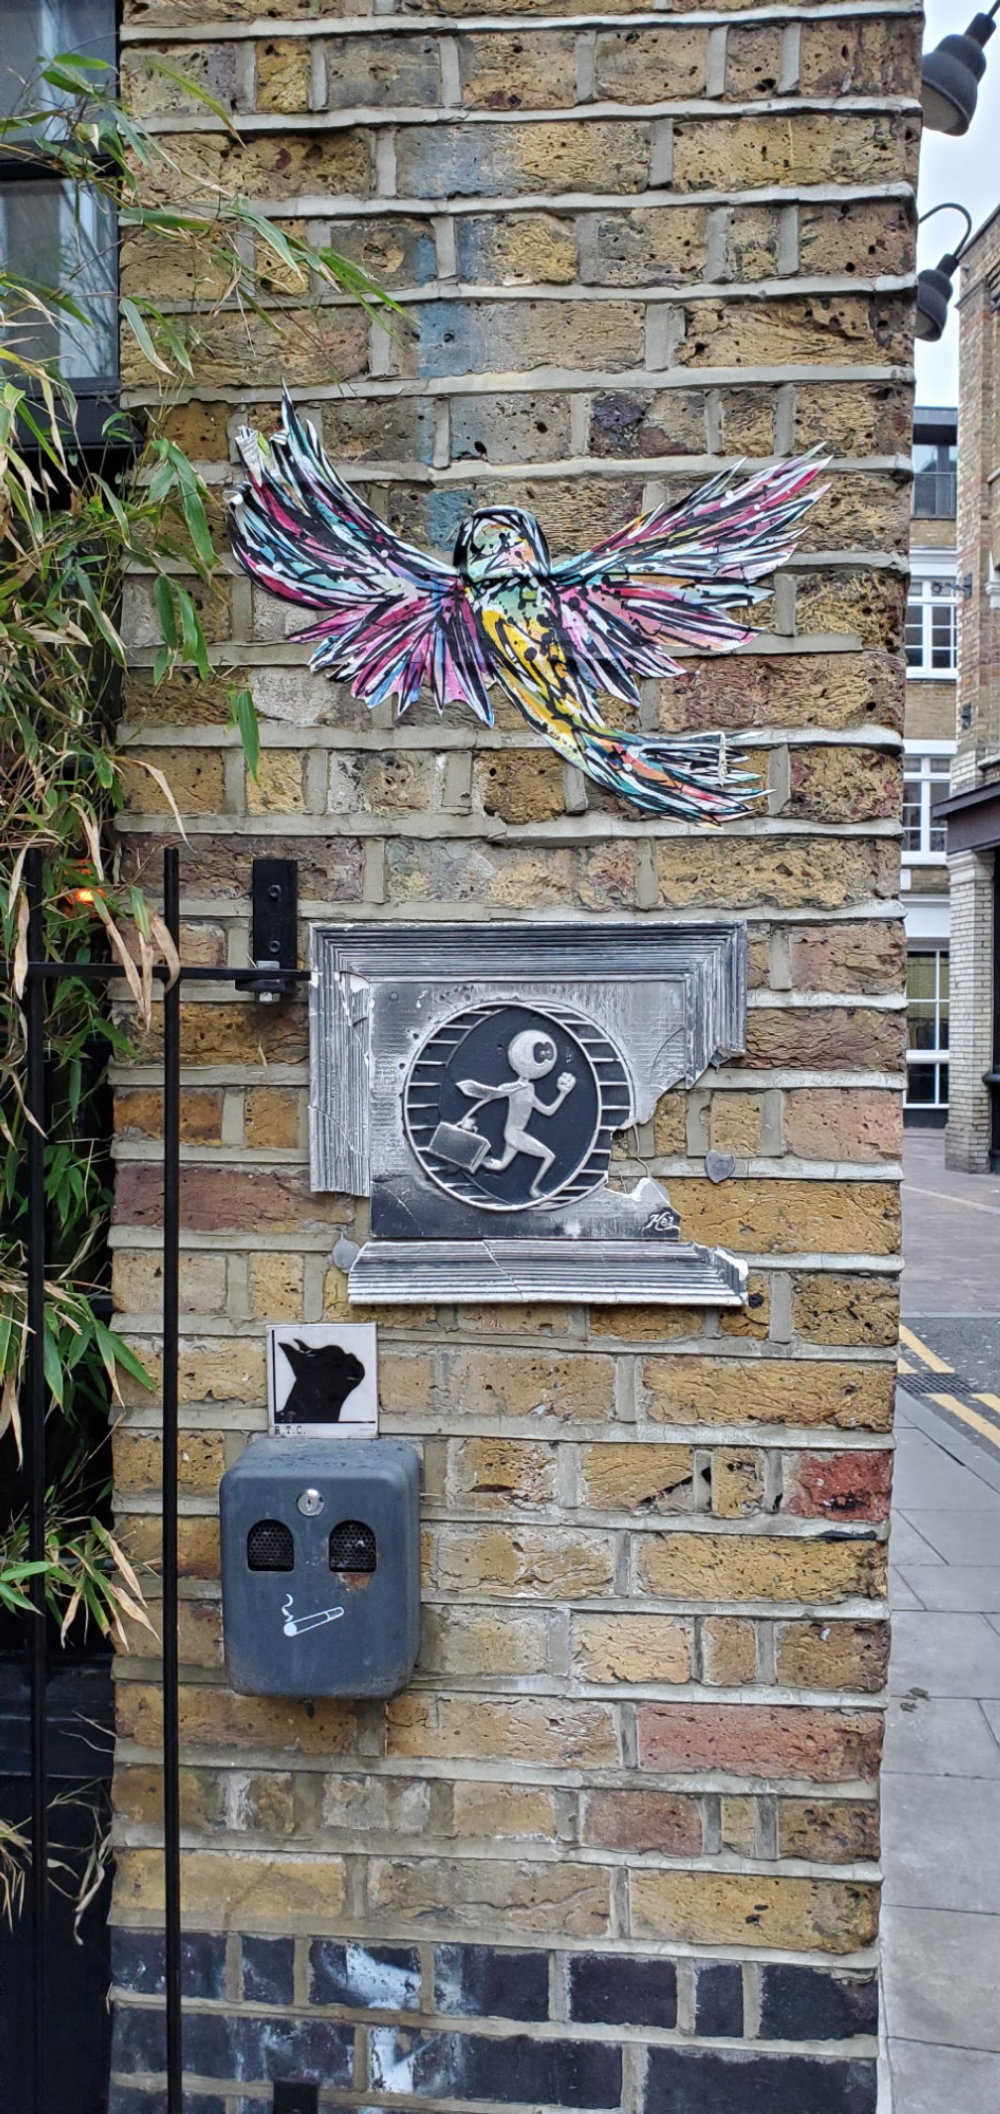 mural in London by artist Kai Guetta.